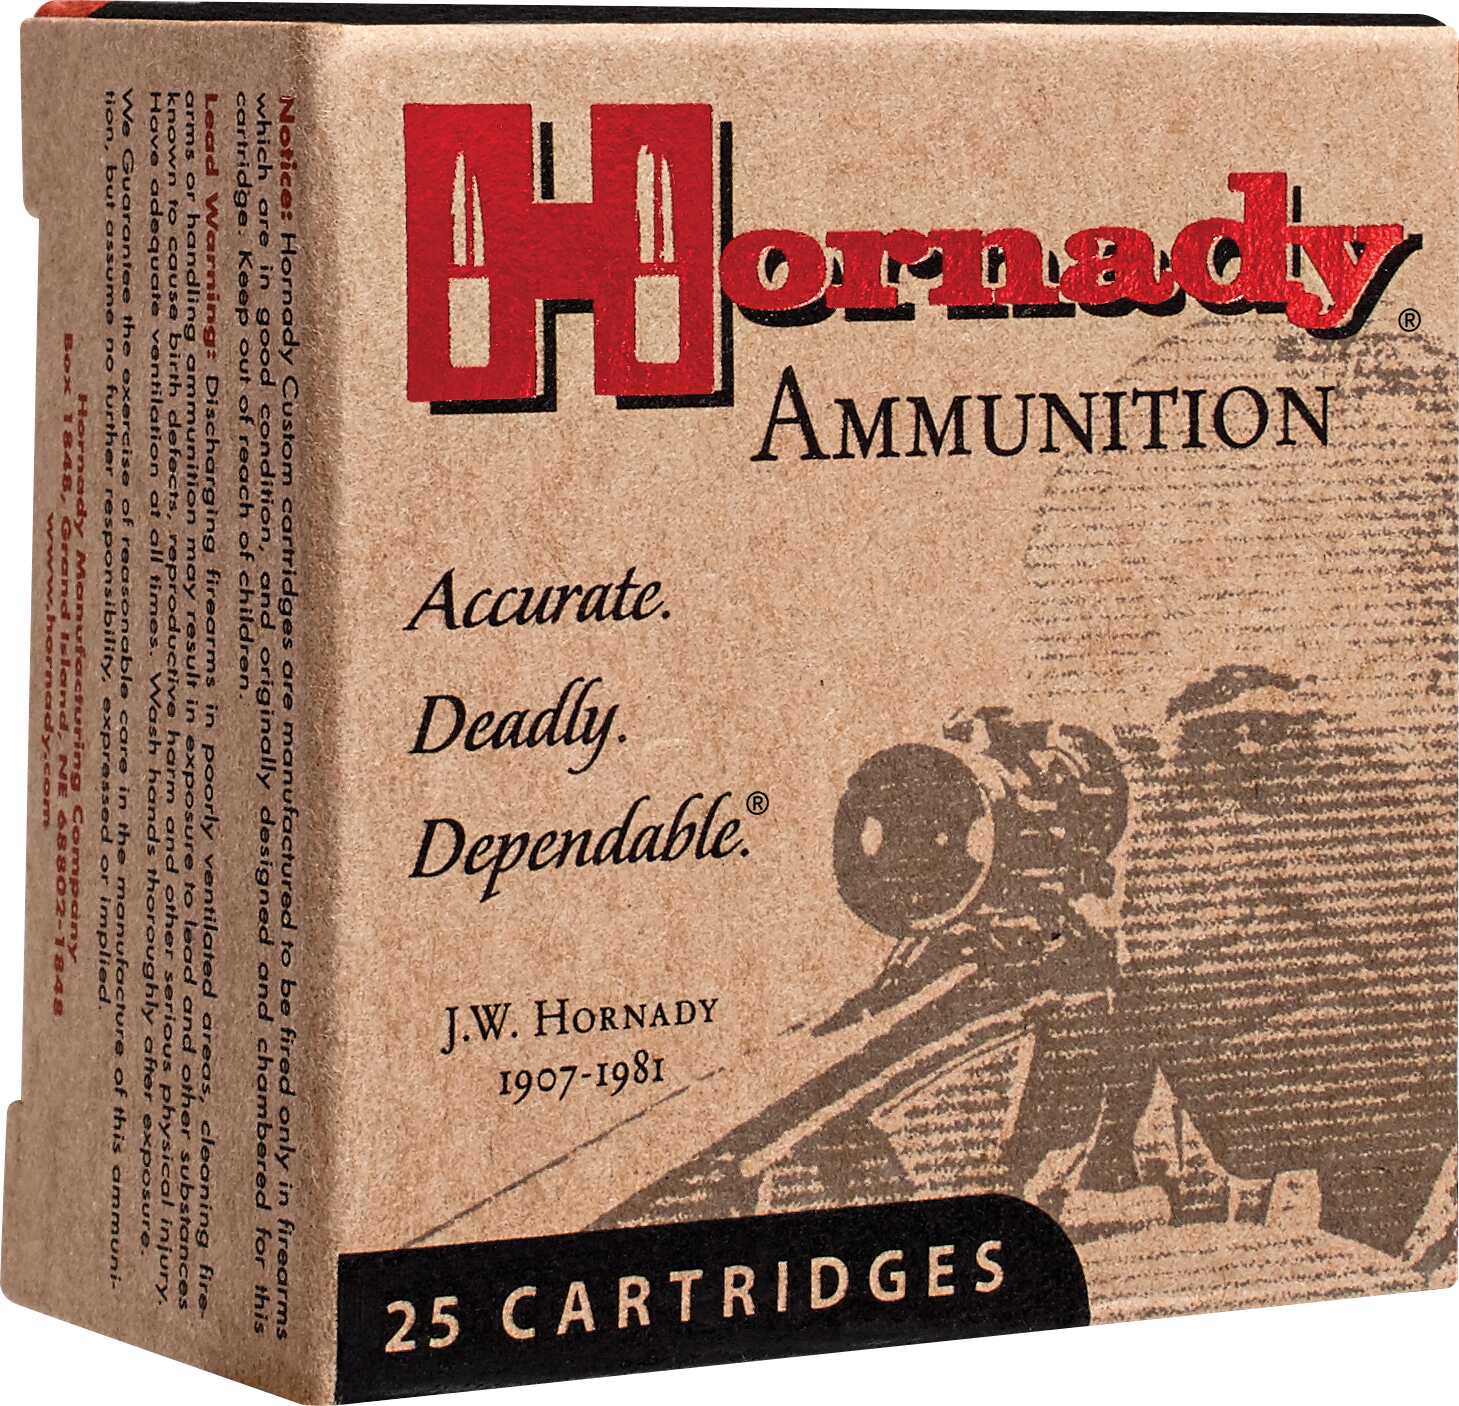 454 Casull 240 Grain Hollow Point 20 Rounds Hornady Ammunition